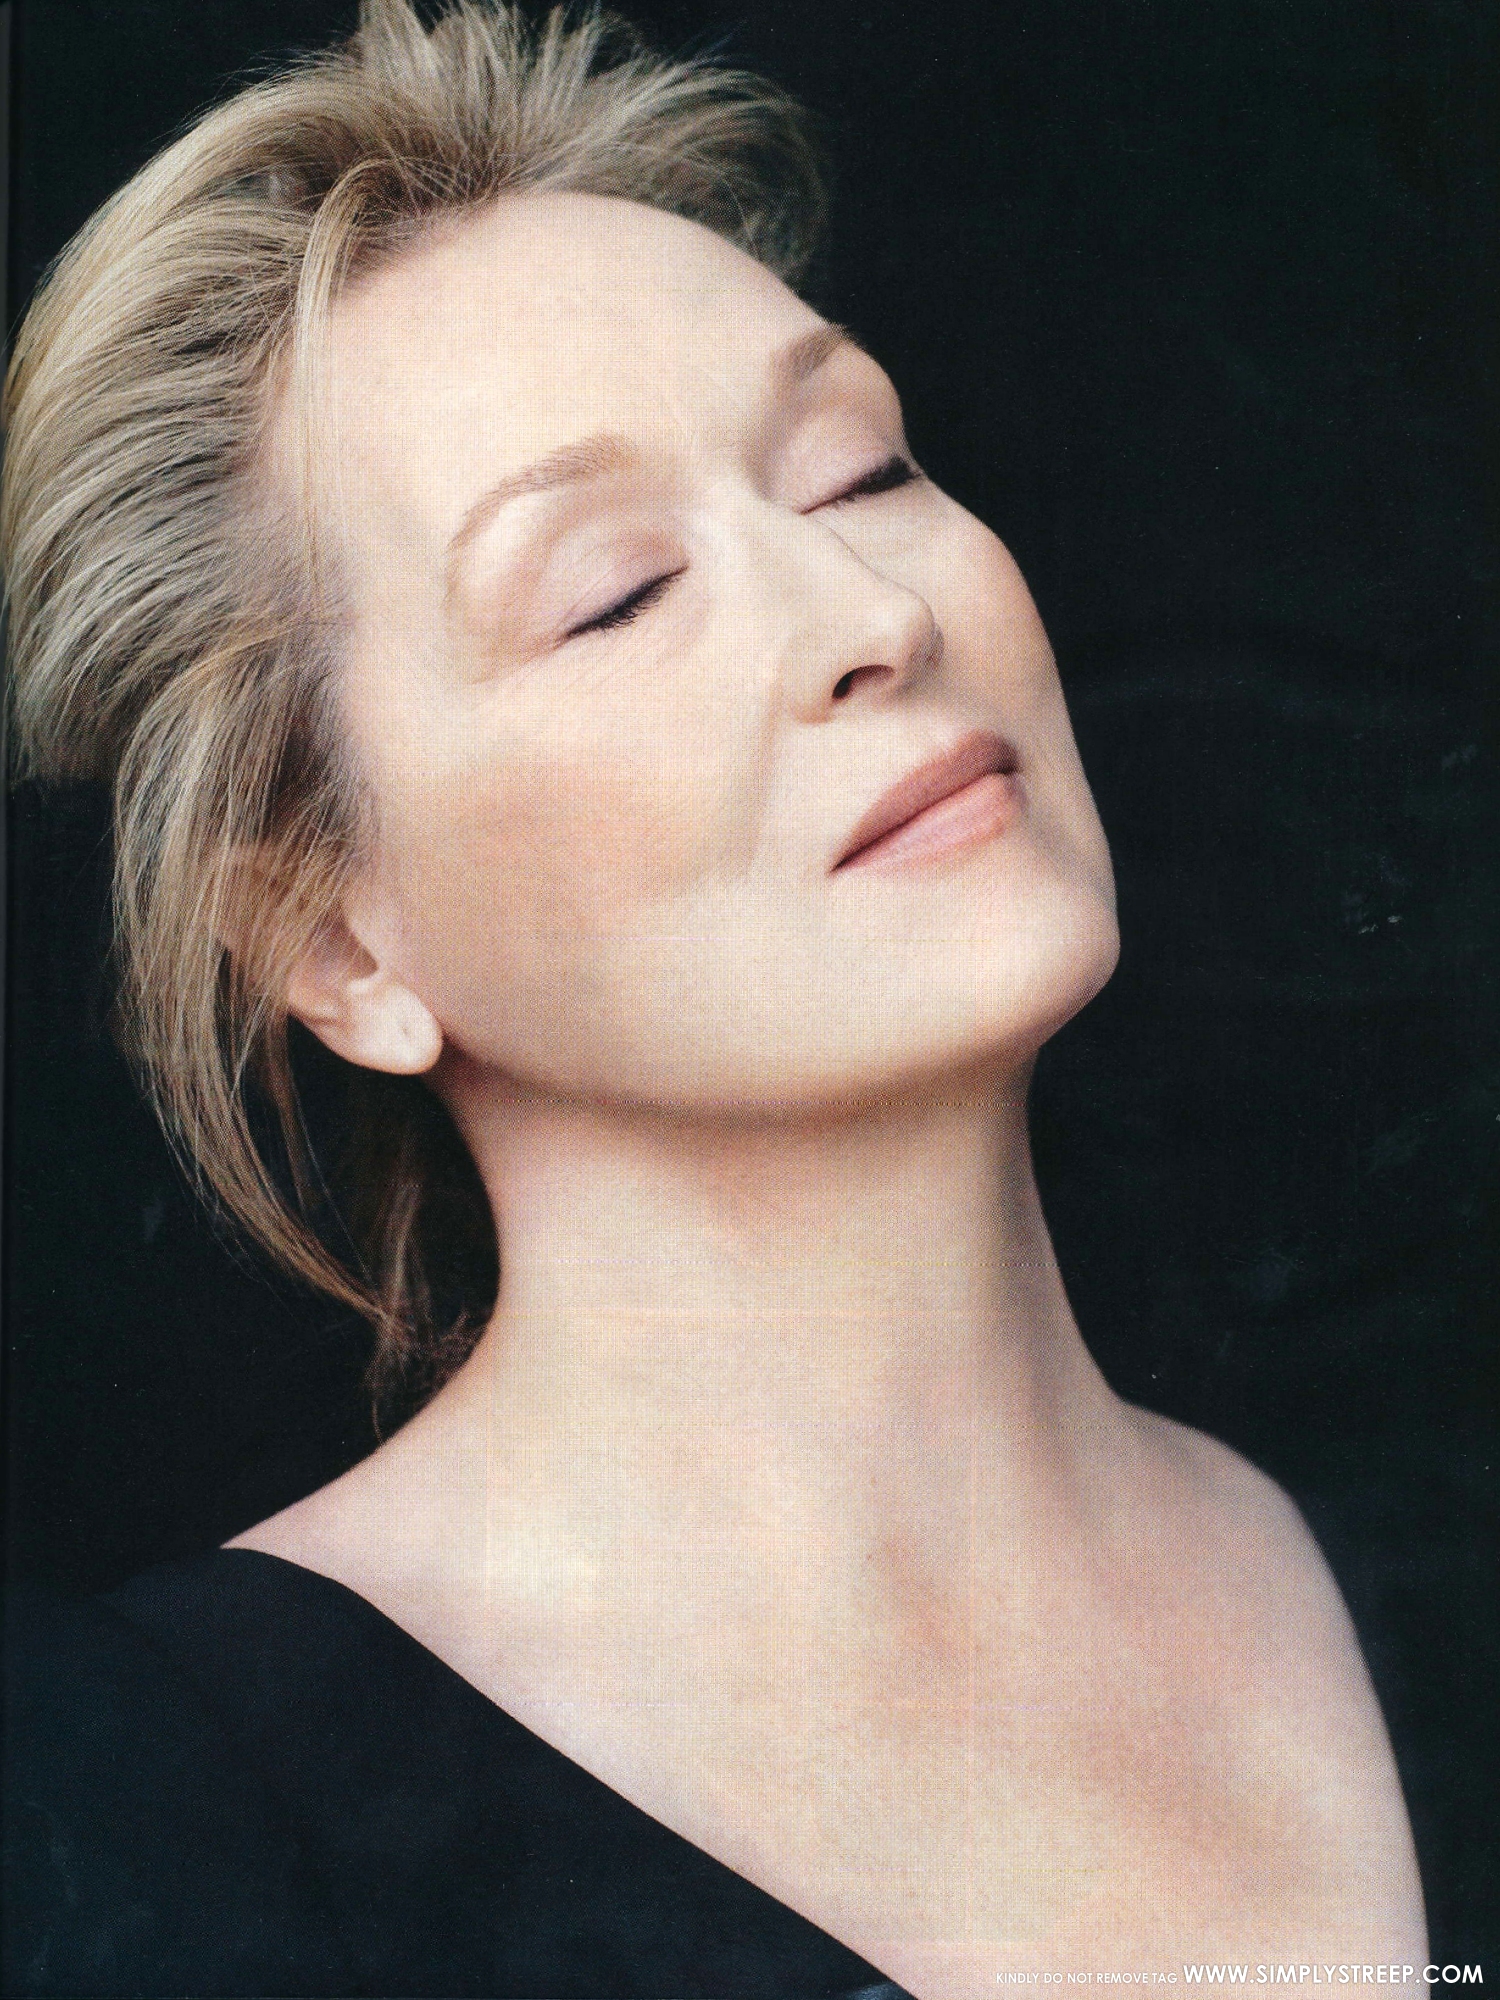 Women’s Weekly (February 2012) - Meryl Streep Photo (28952683) - Fanpop